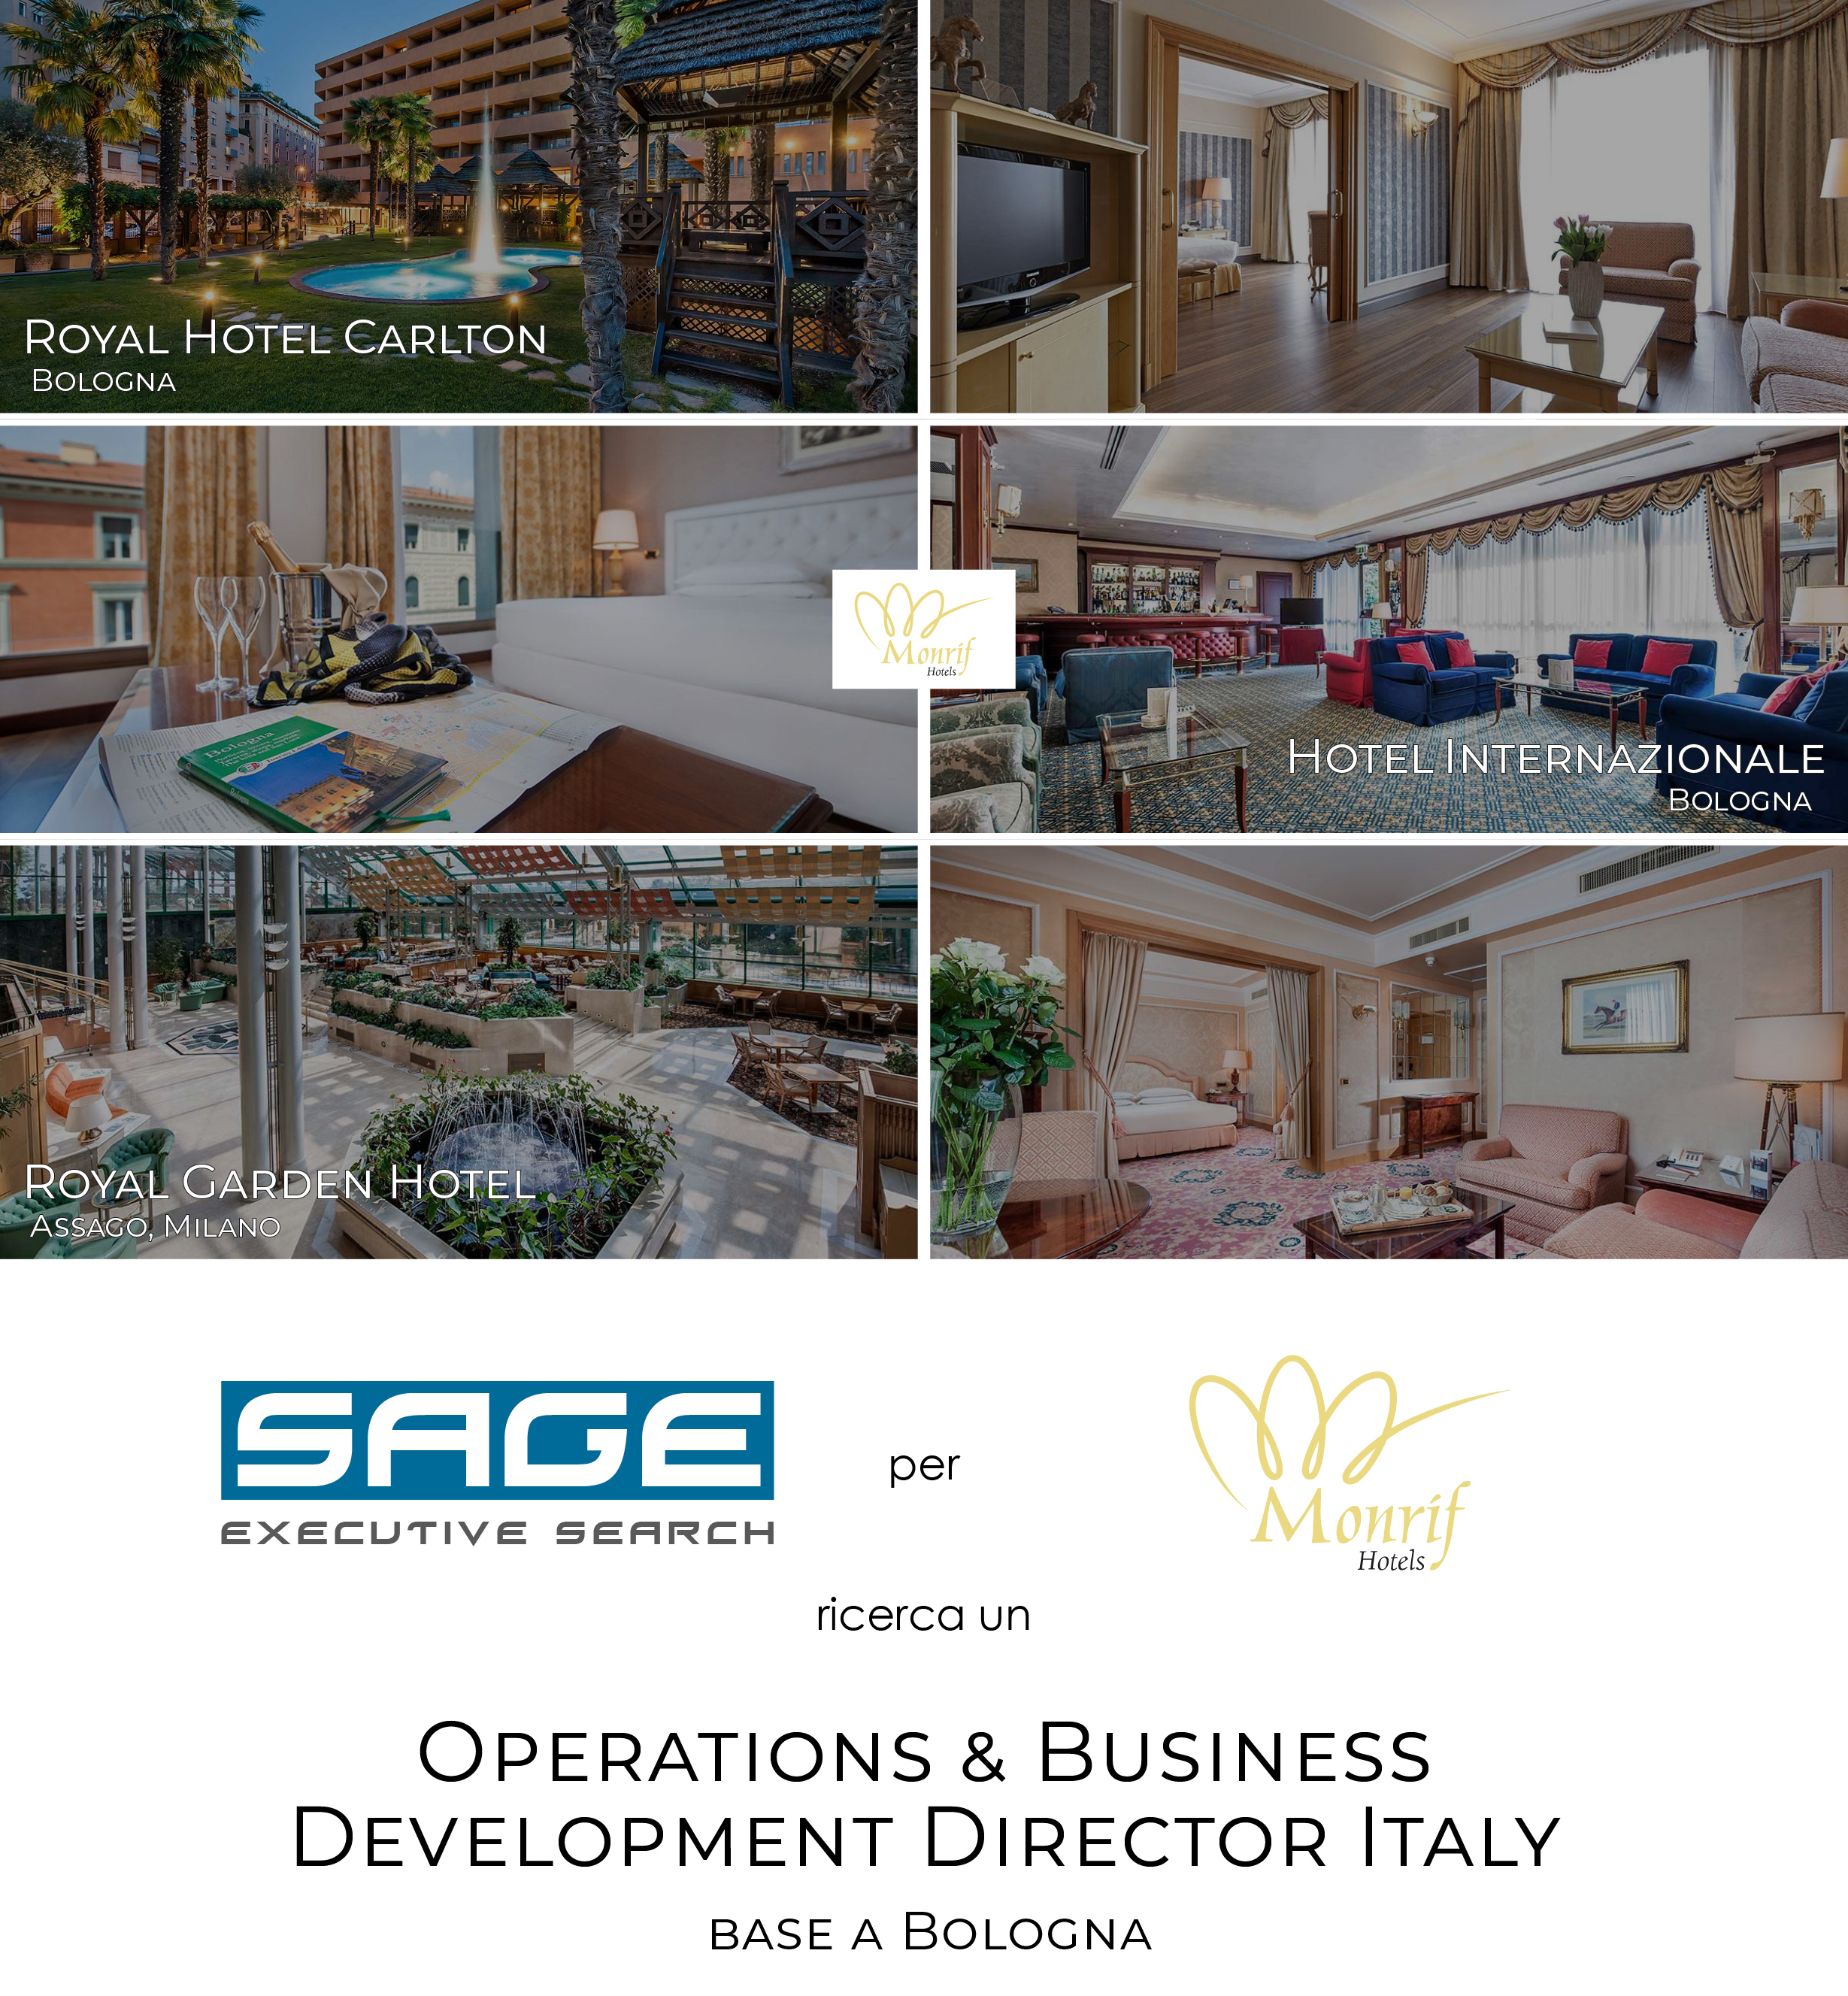 SAGE EXECUTIVE SEARCH per Monrif Hotels ricerca un Operations e Business Development Director Italy base a Bologna